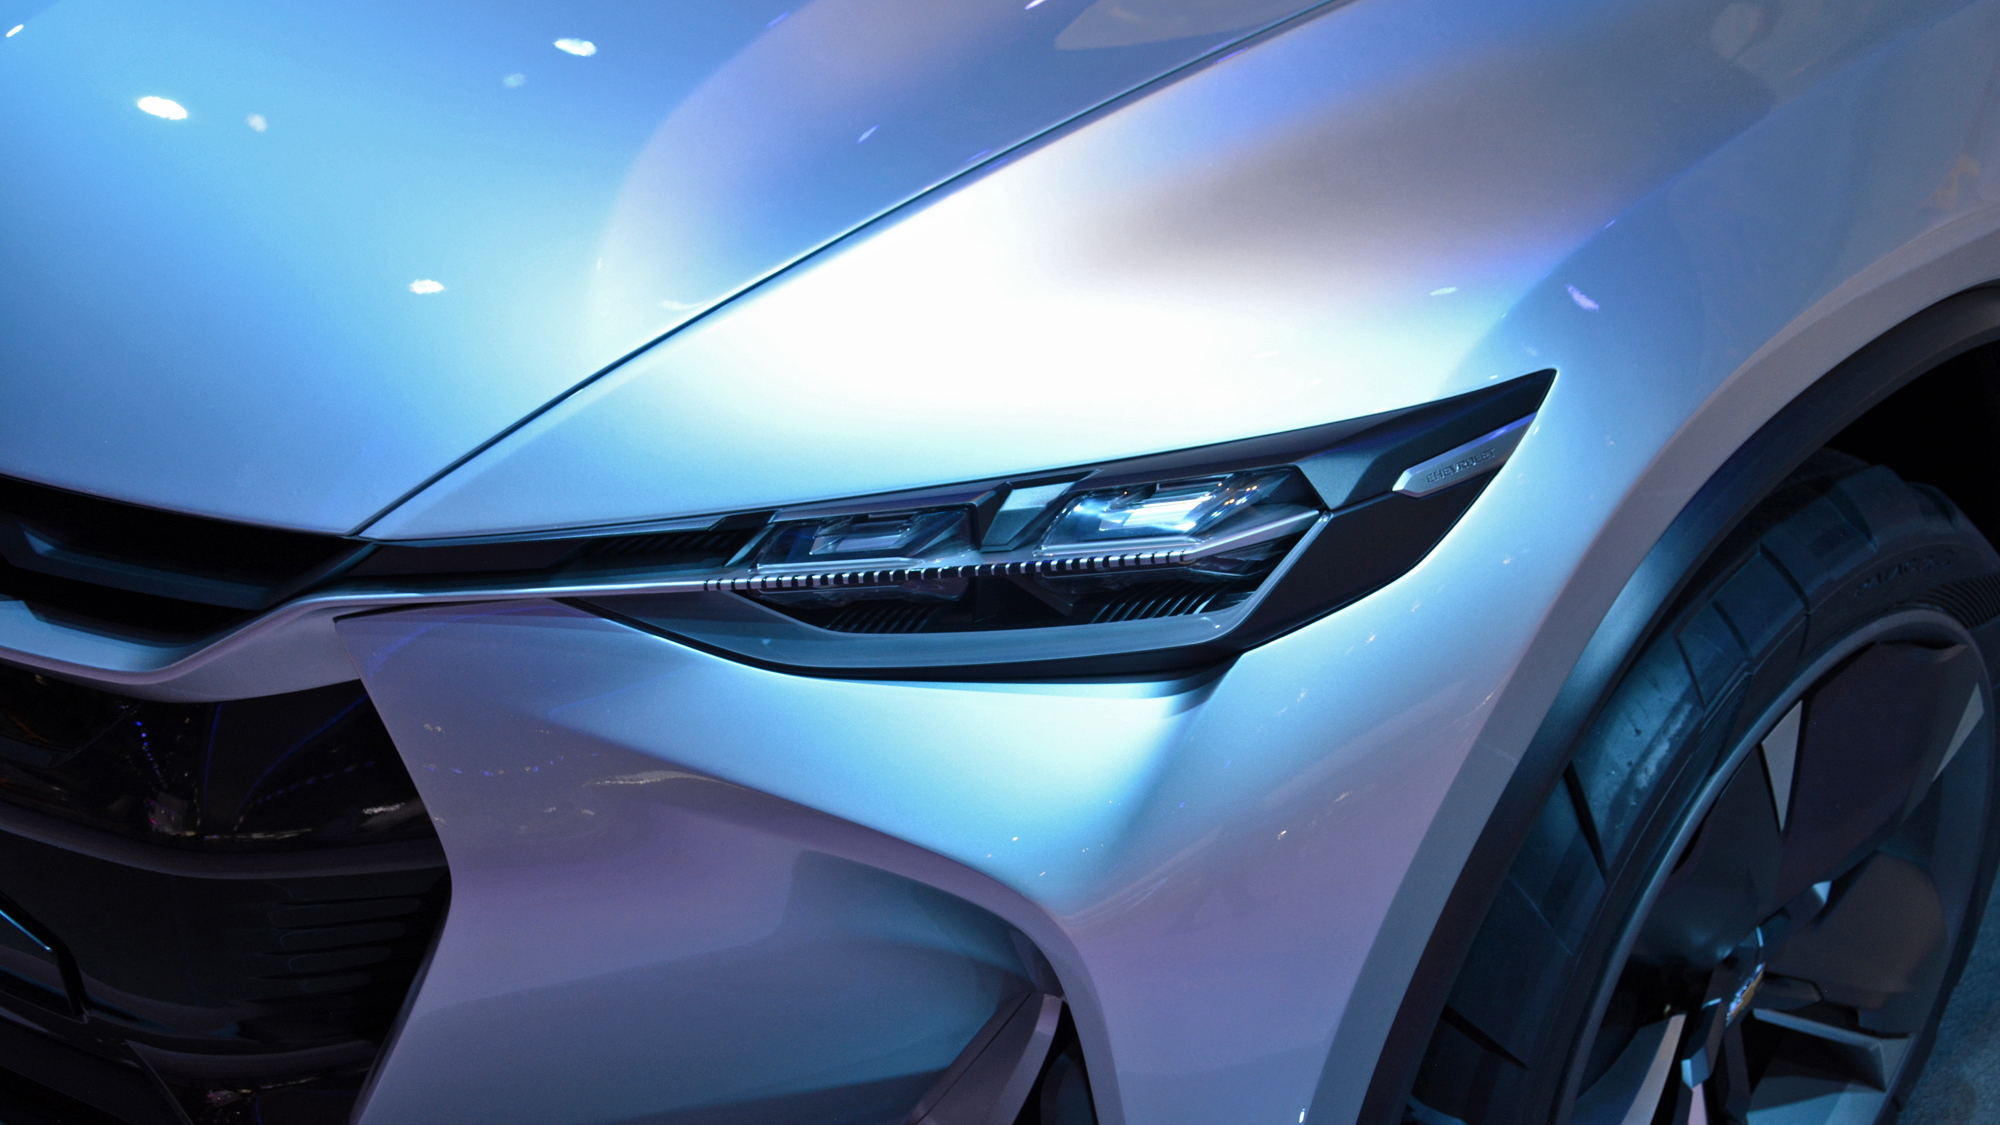 Chevrolet FNR-X Concept for plug-in hybrid crossover, 2017 Shanghai auto show   [photo: Ronan Glon]